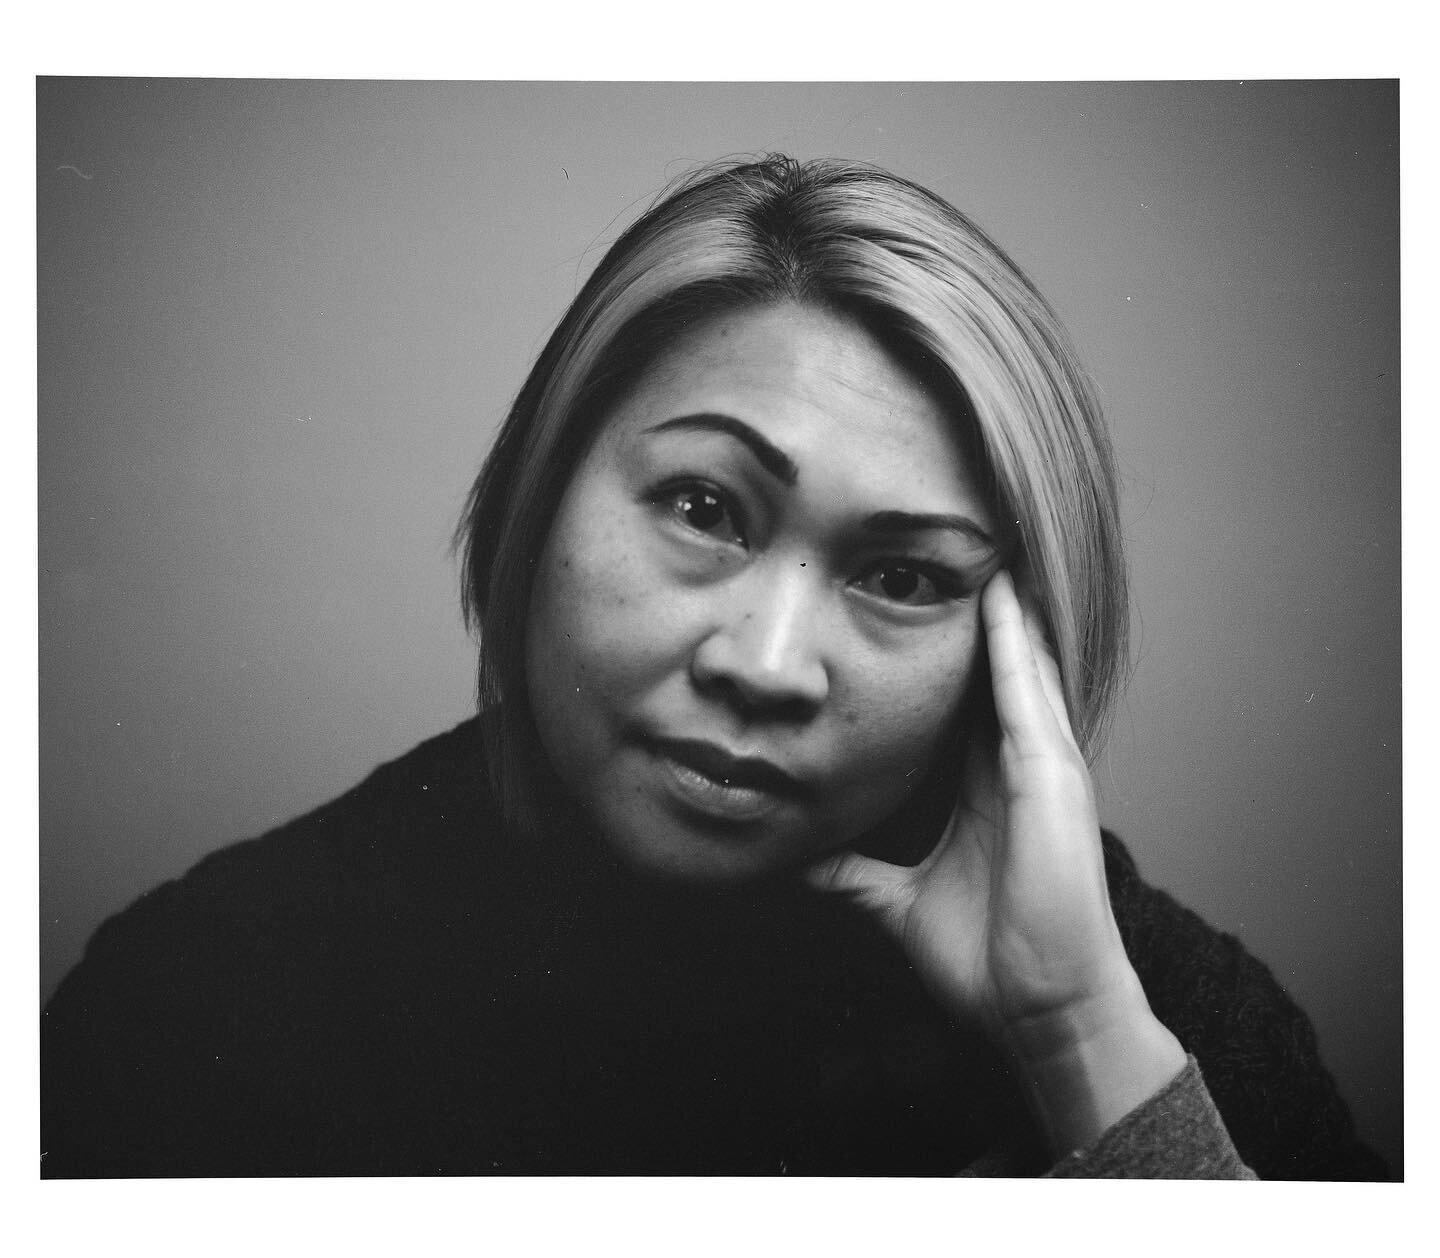 Sheena on 4x5 #largeformat #portrait #bwphotography #ilfordfp4 #toyo #seattlephotography #filmisnotdead